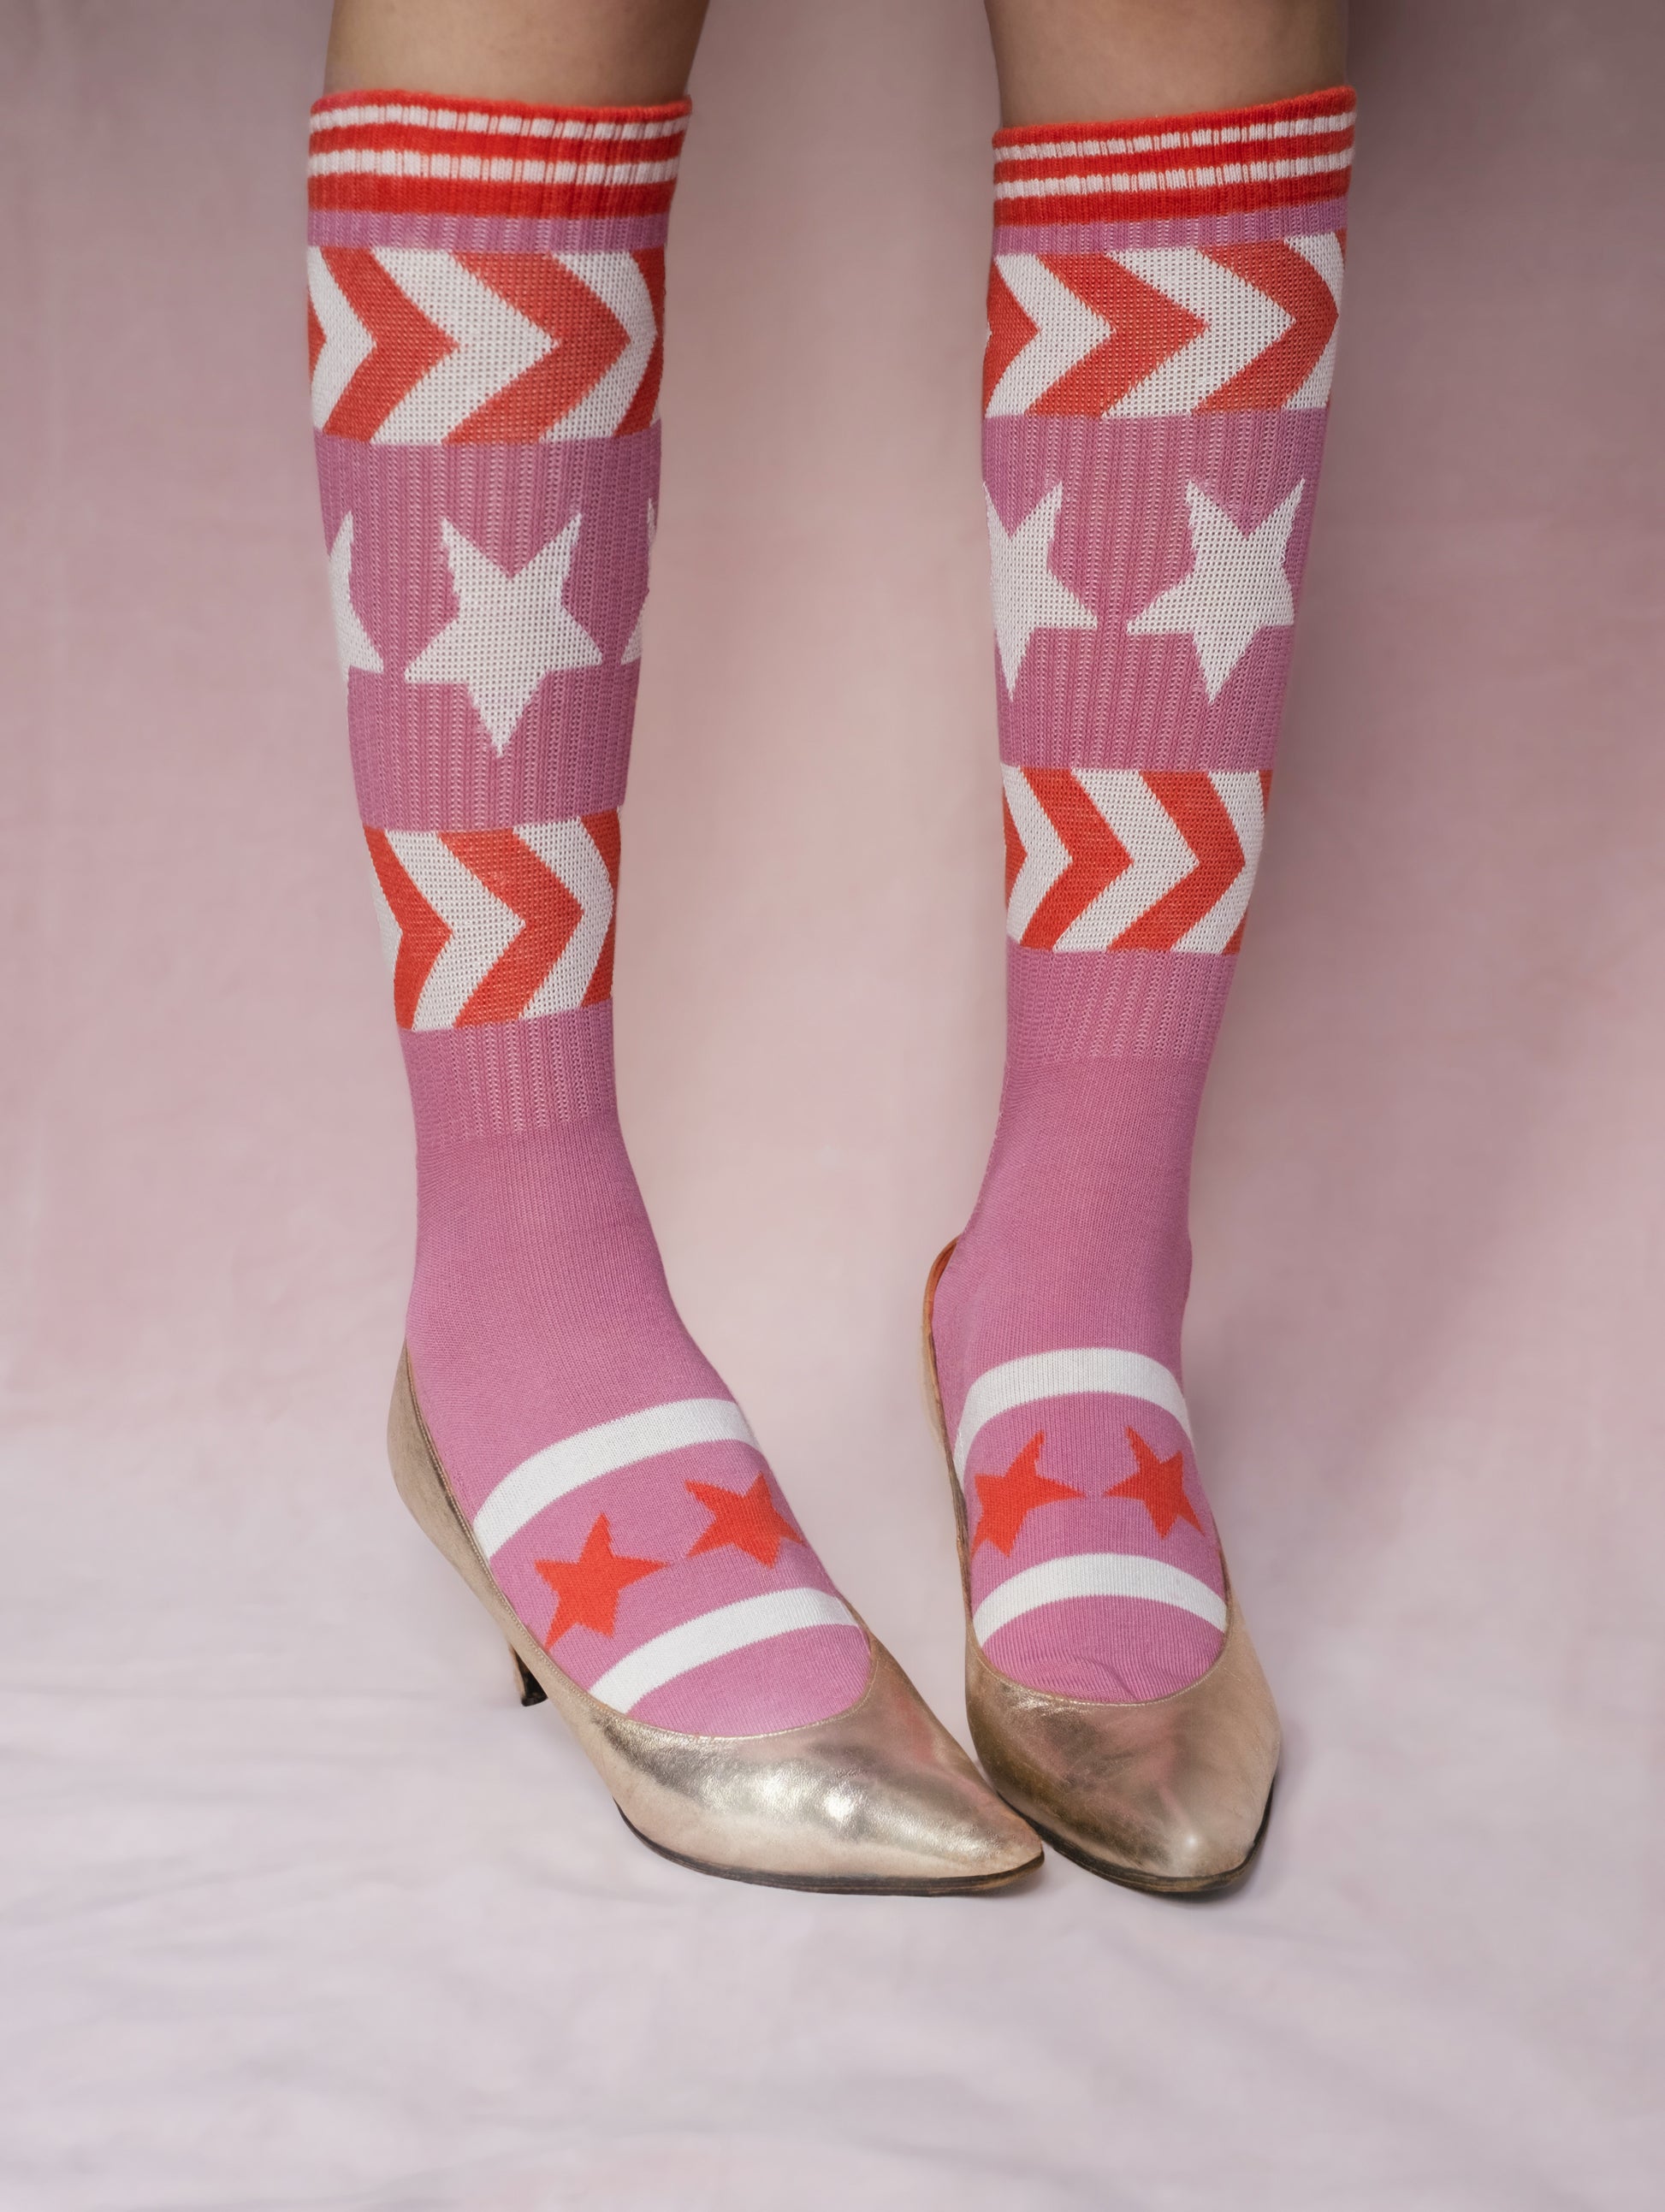 Dandy Star sporty socks cotton rich 100% sporty